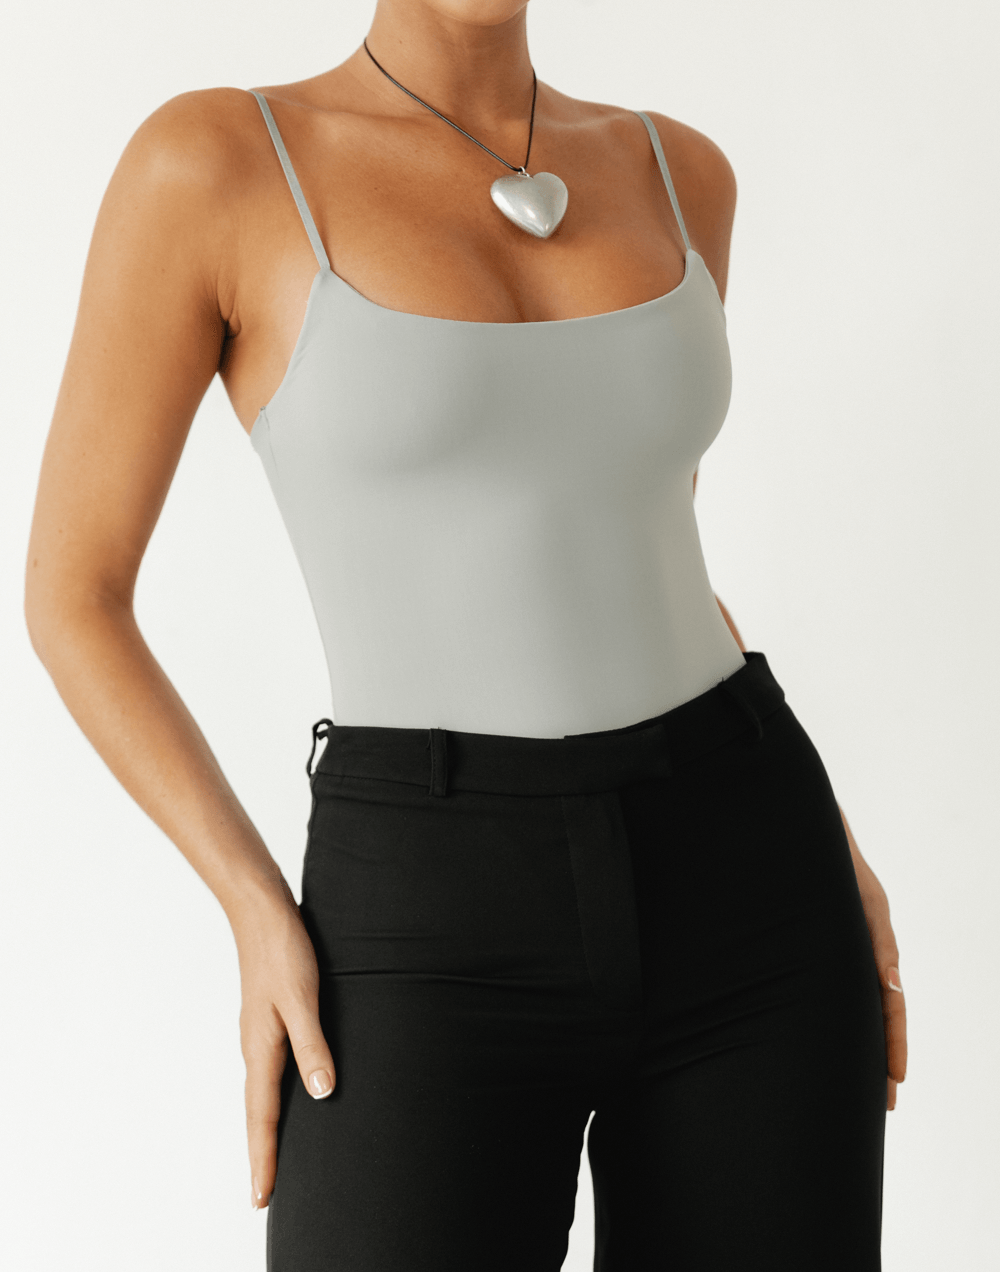 Miya Bodysuit (Sage) - Spaghetti Strap Bodysuit - Women's Top - Charcoal Clothing